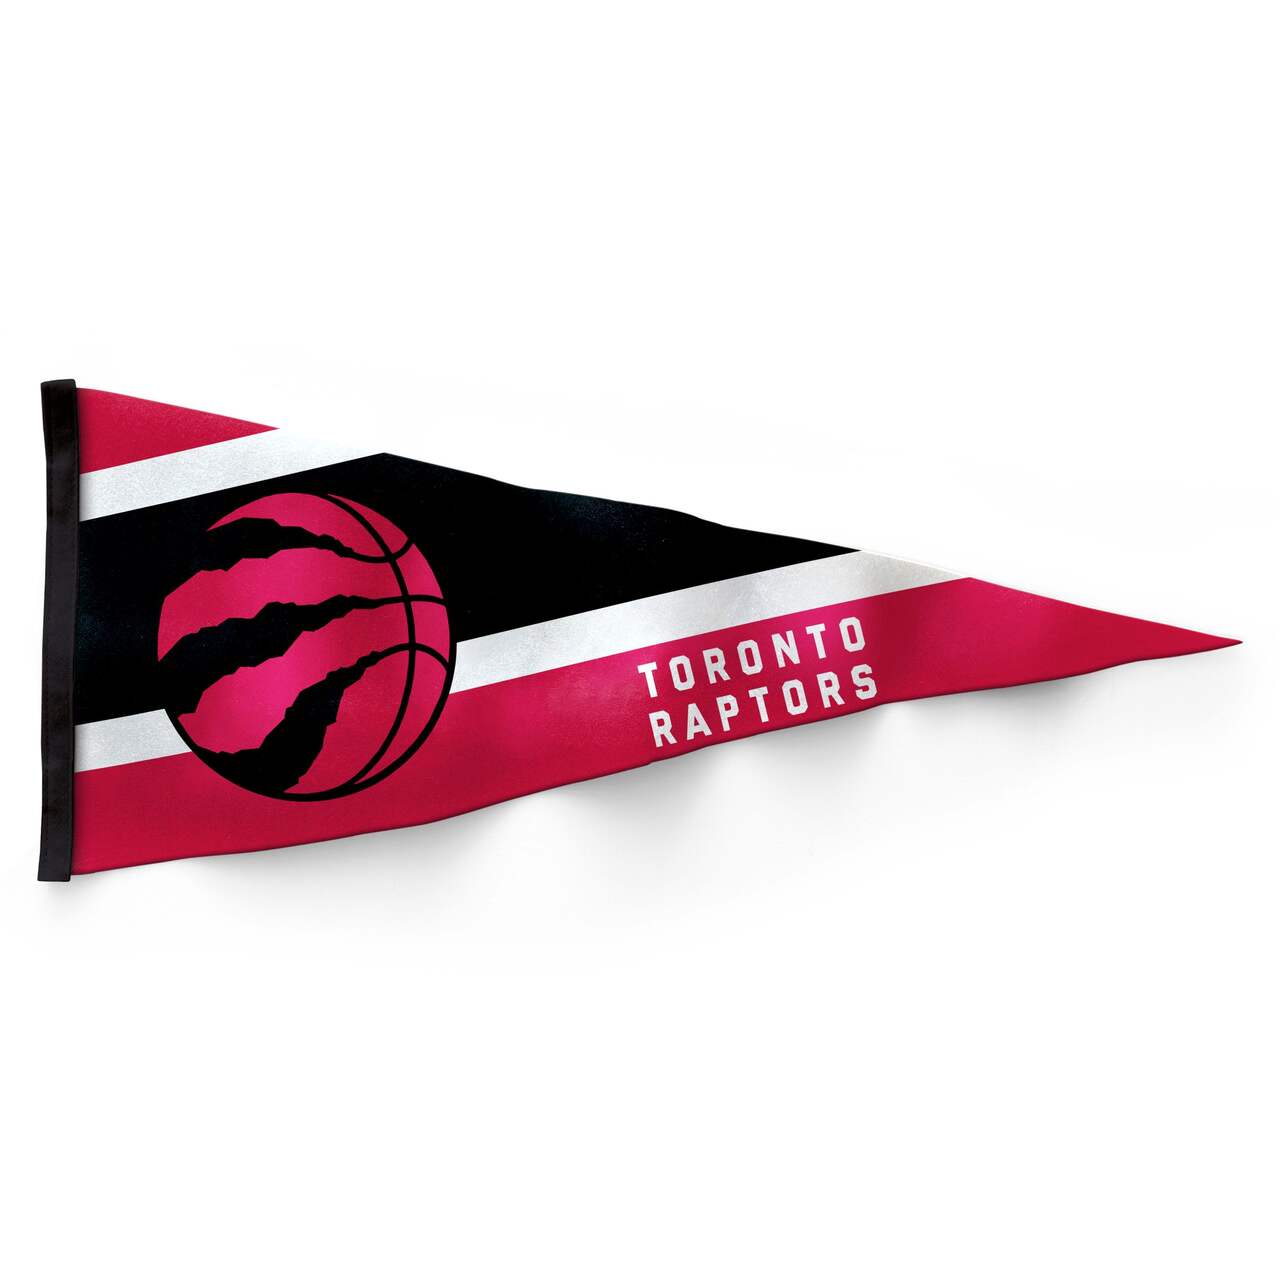 Toronto Raptors Team Pennant For NBA Basketball Fans/Collectors